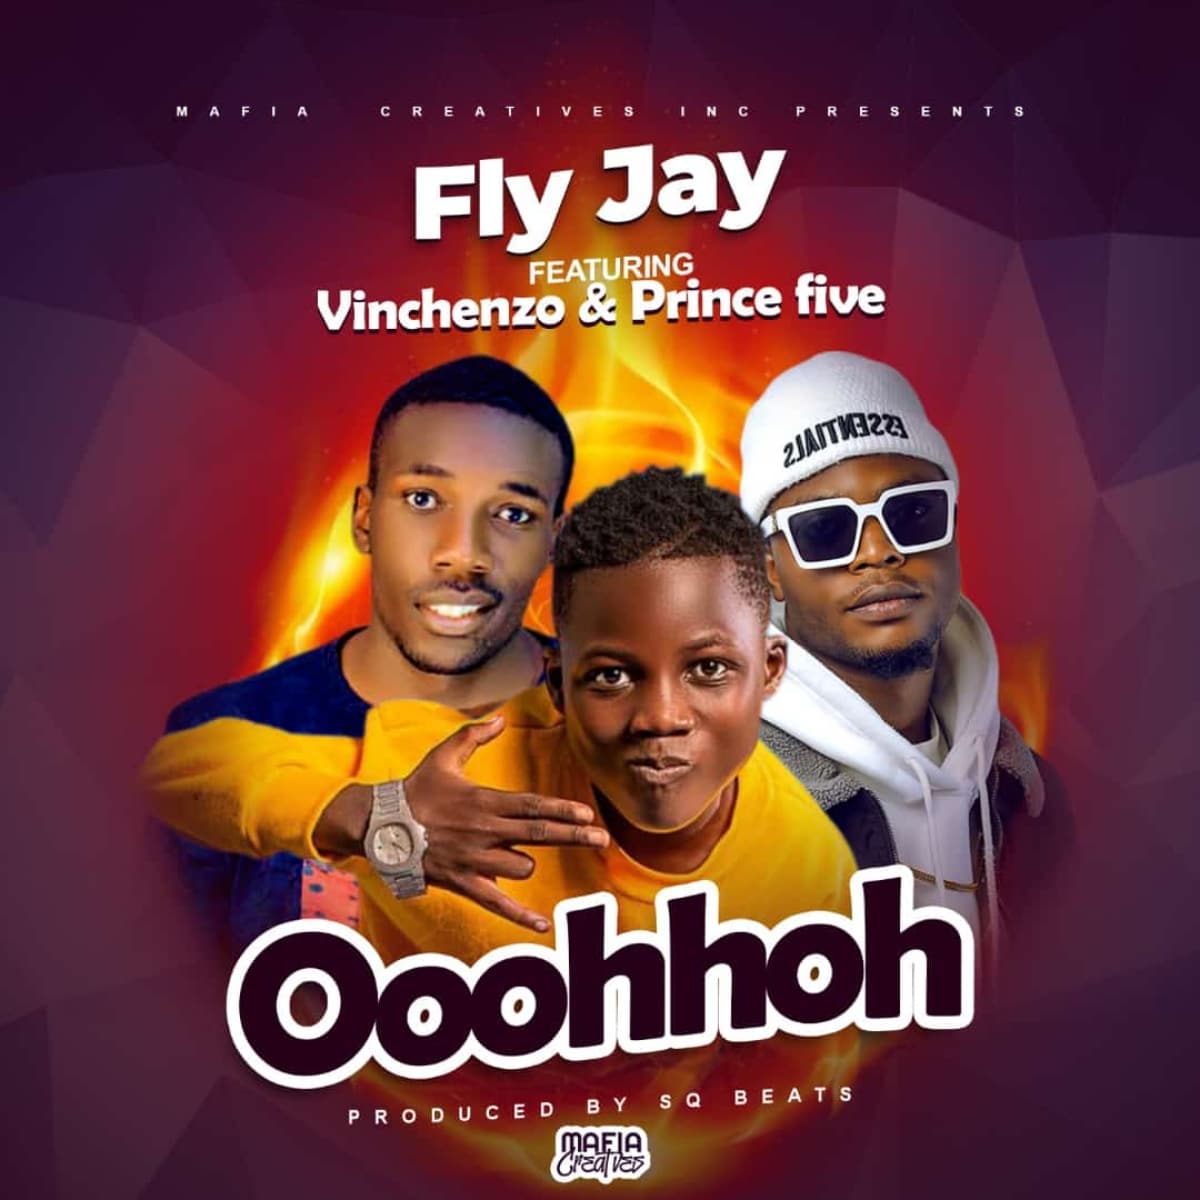 DOWNLOAD: (Zakado Gang) Fly Jay Ft. Vinchenzo & Prince Five – “Ooohhoh” Mp3